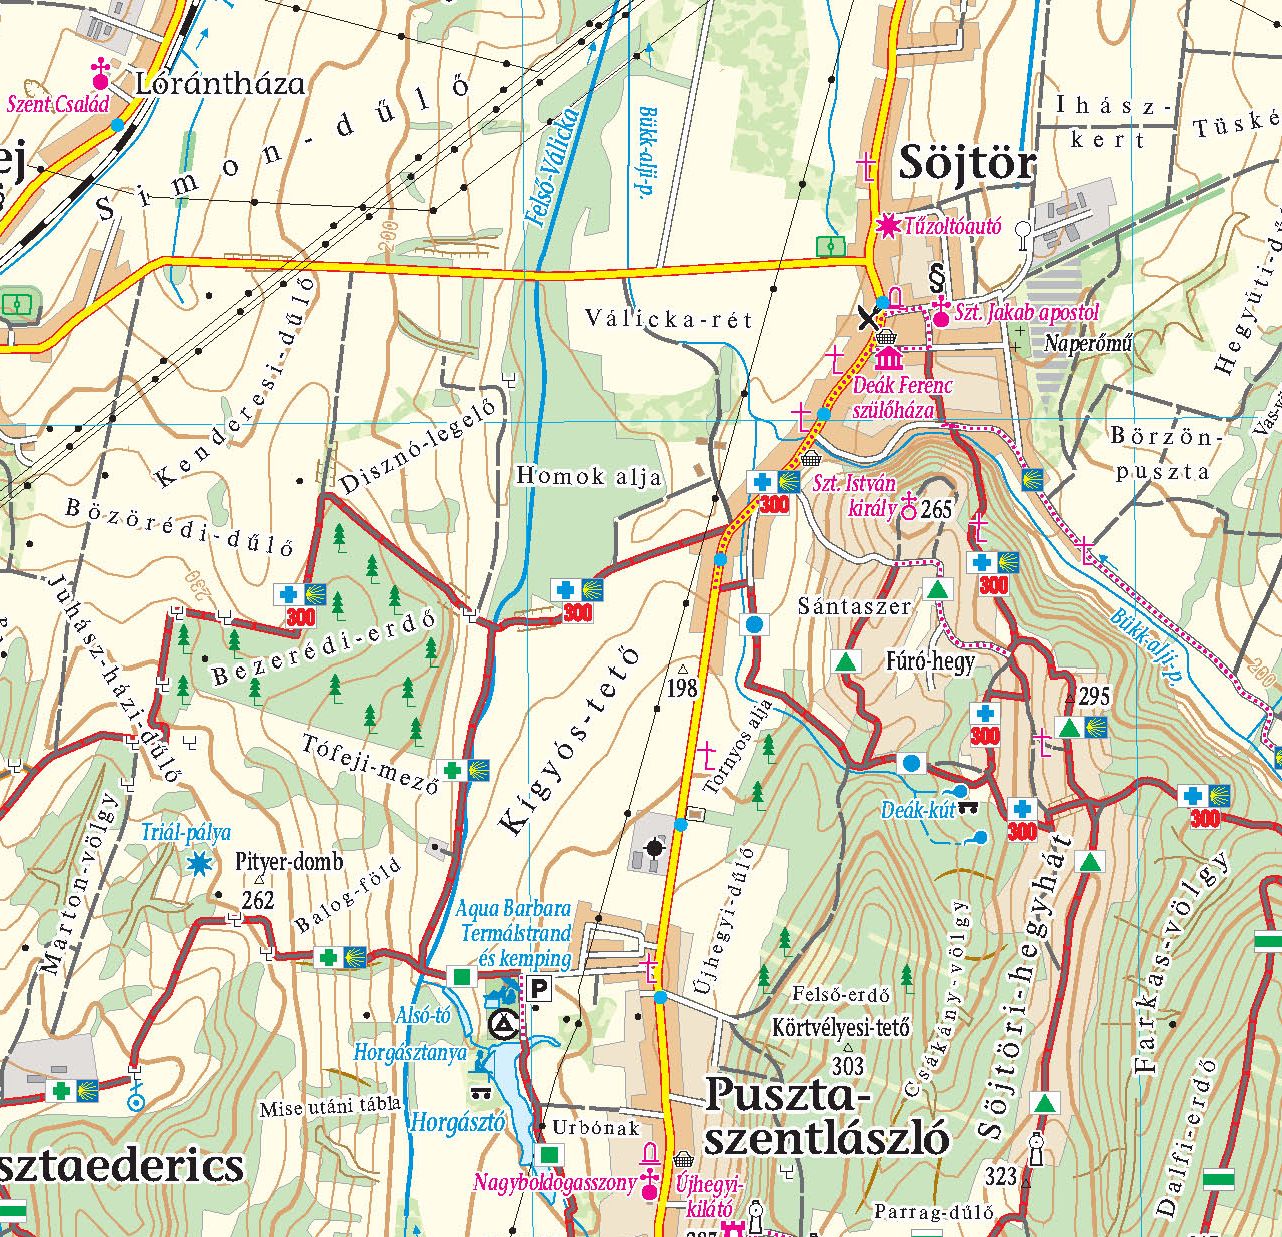 Zala hills (North), Göcsej sample map 1:50.000